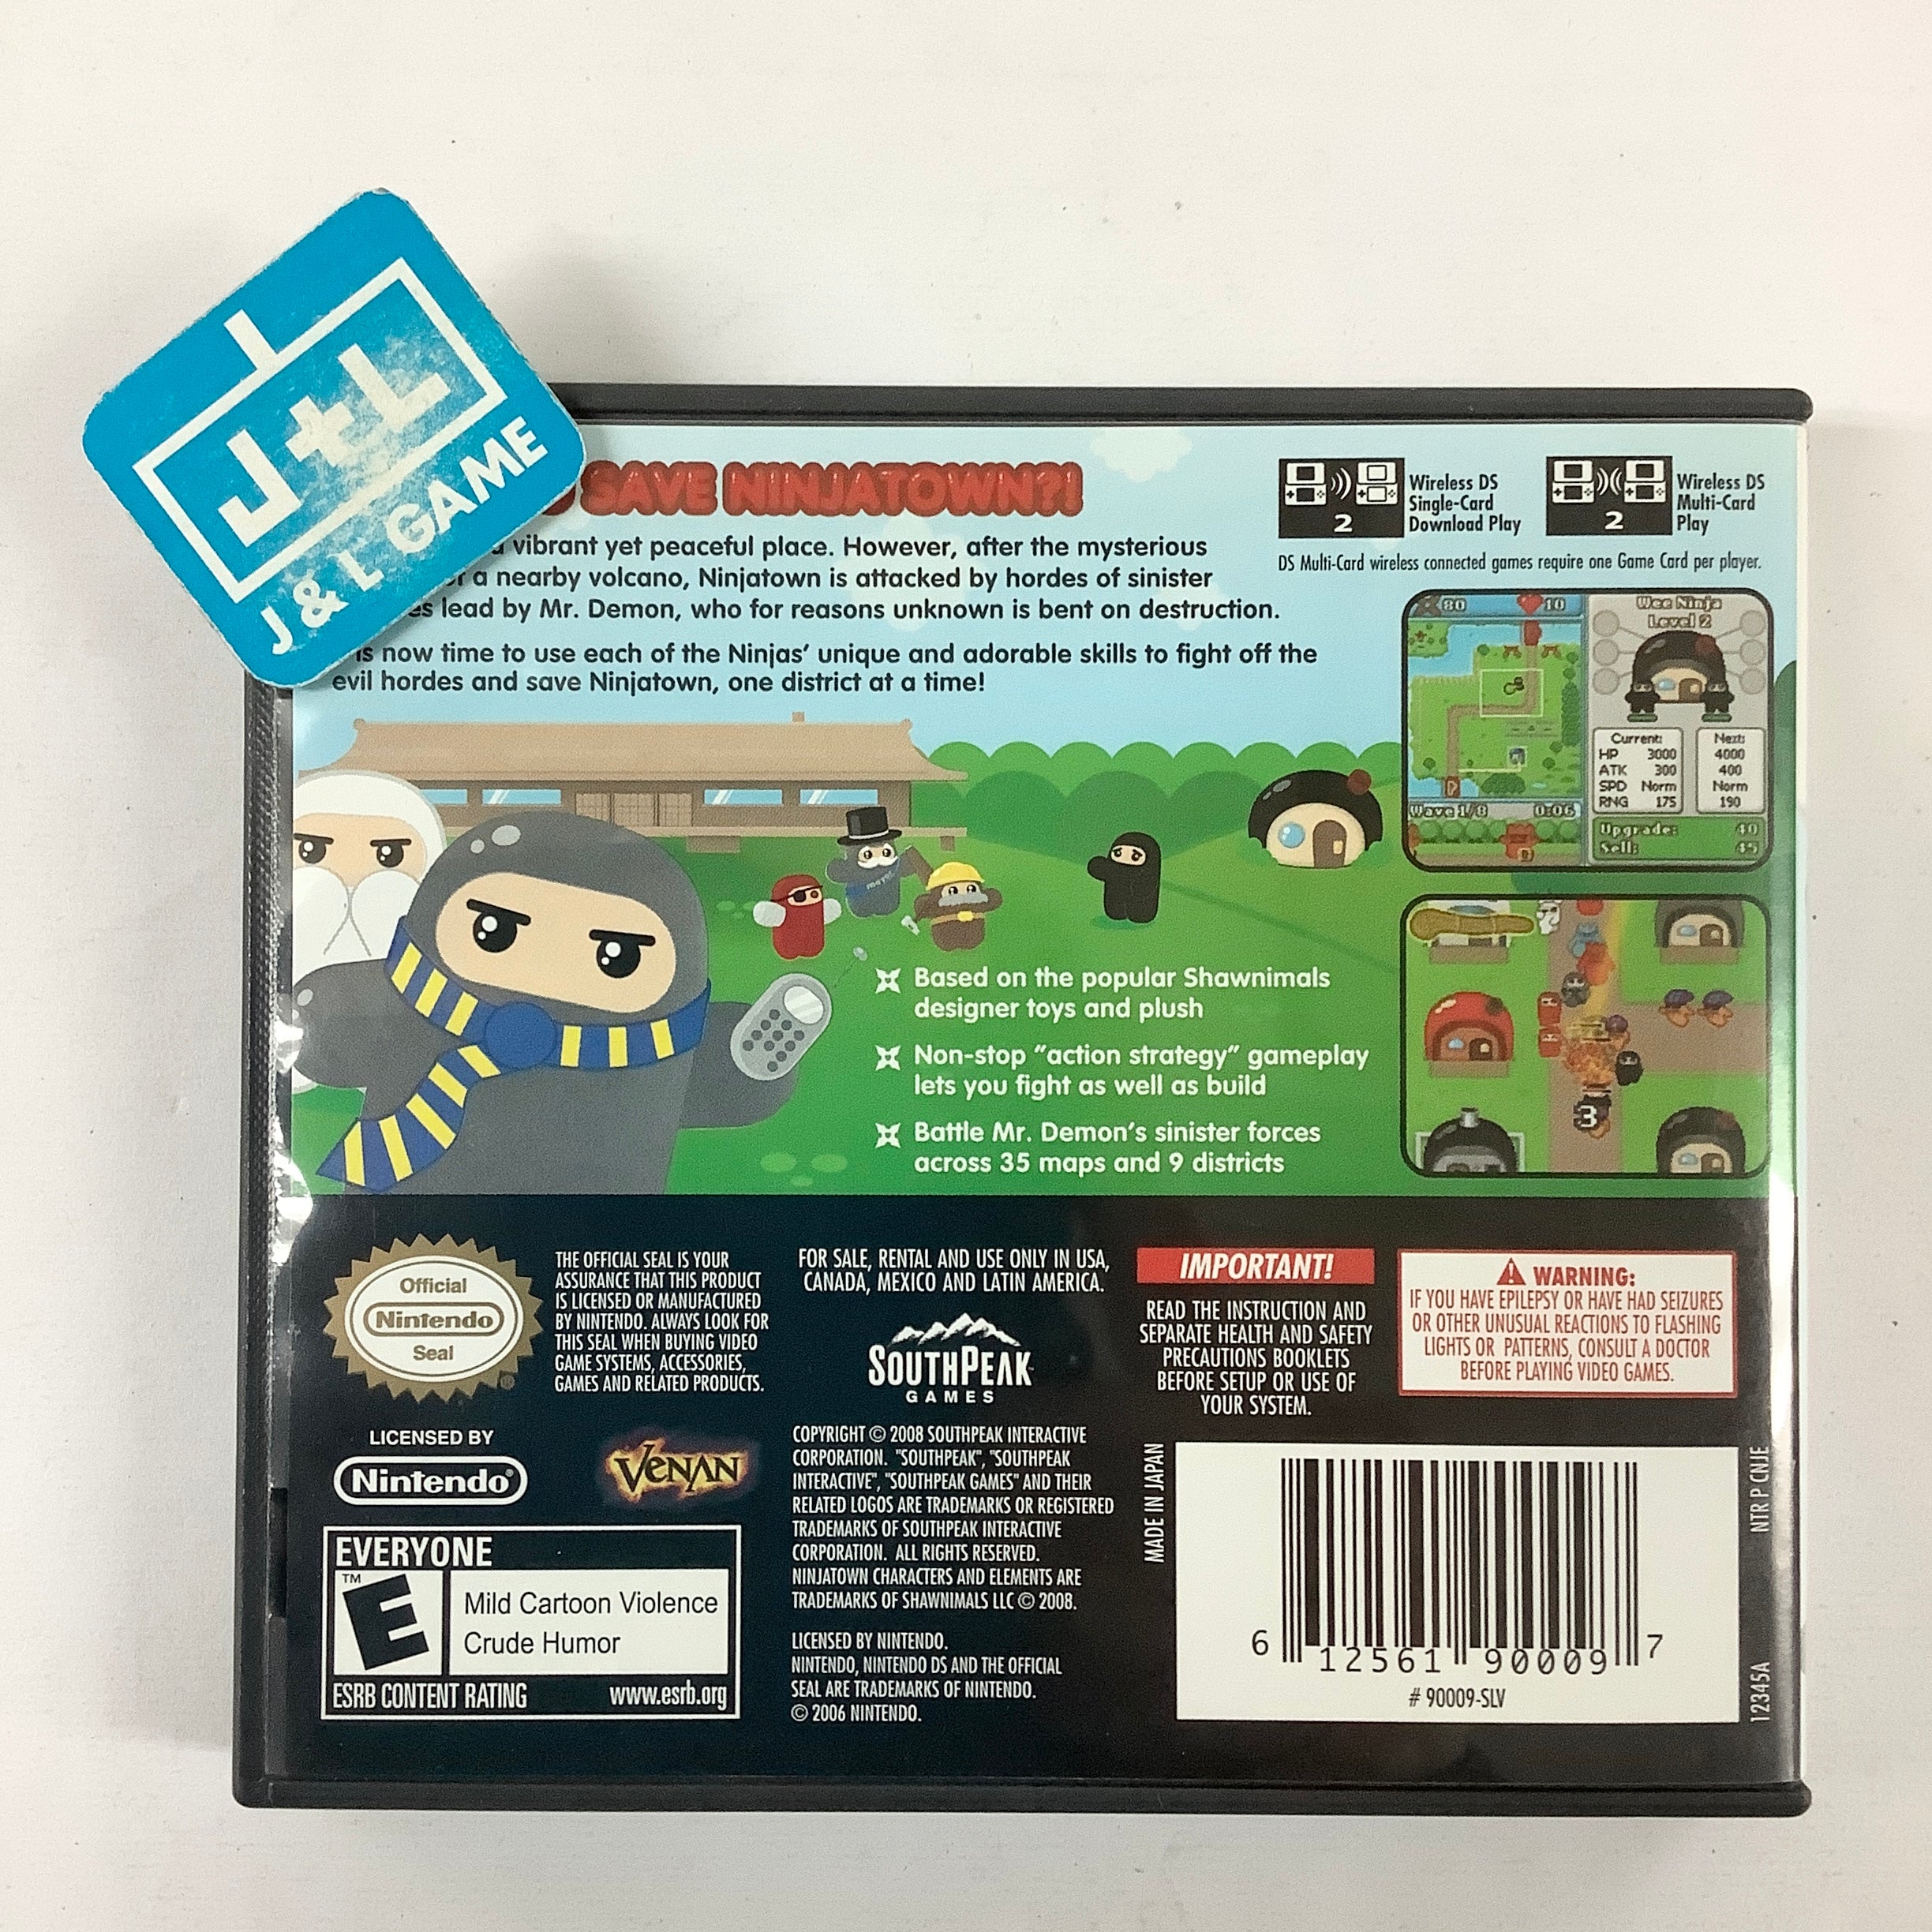 Ninjatown - (NDS) Nintendo DS [Pre-Owned] Video Games SouthPeak Games   